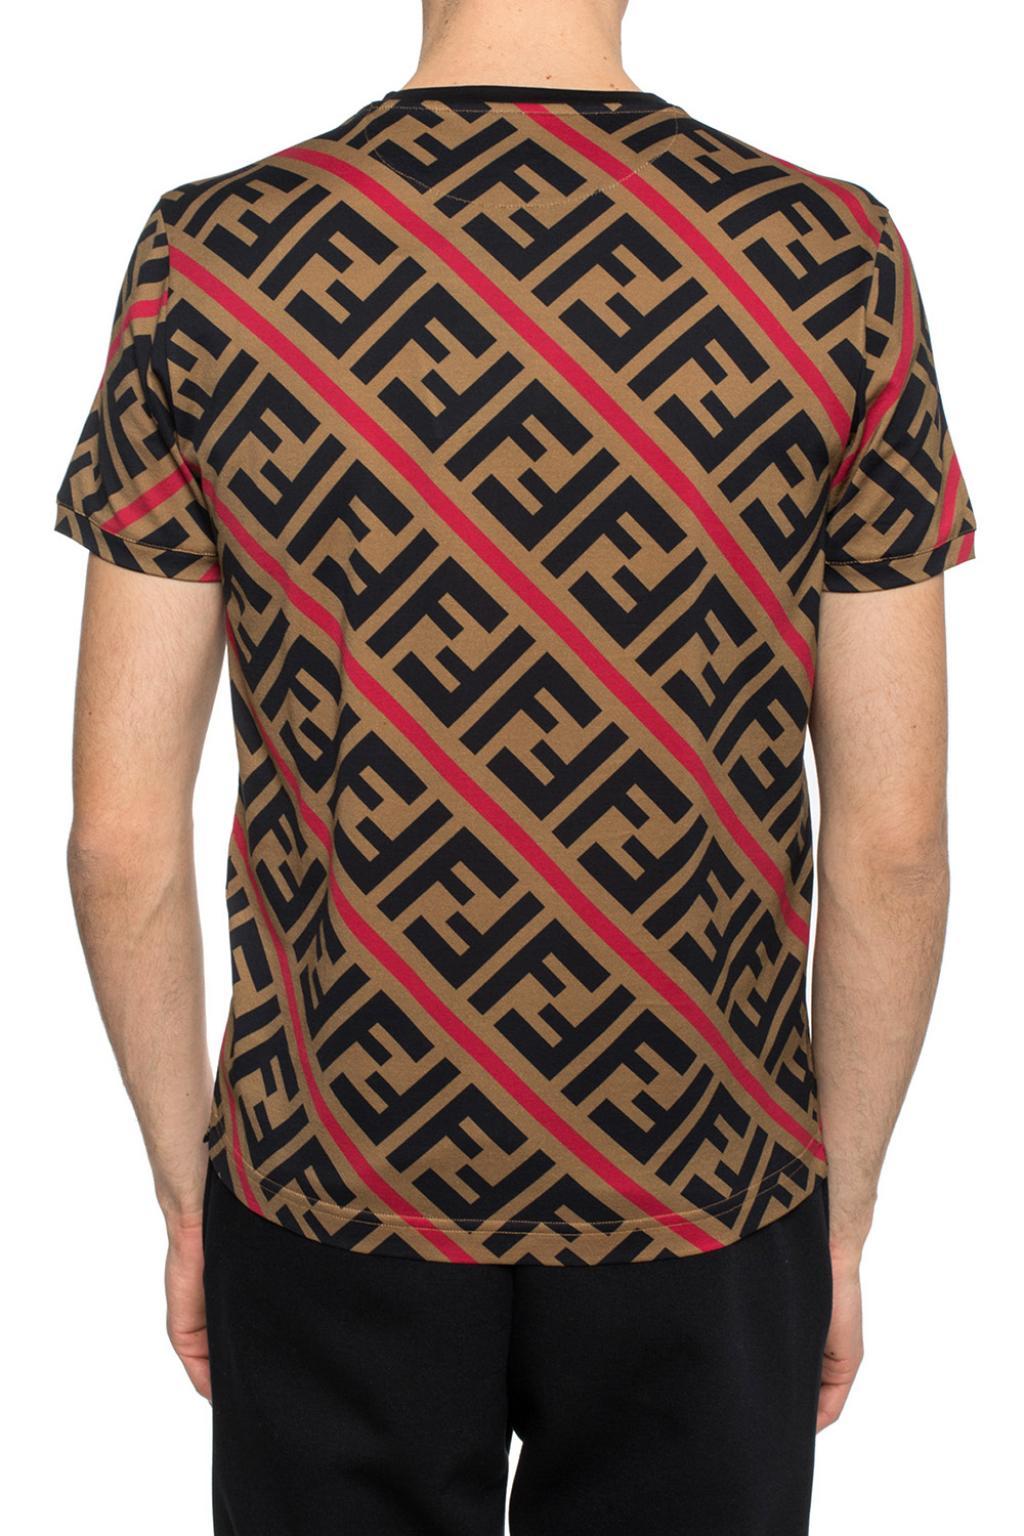 Fendi Double F Logo T-shirt in Brown for Men - Lyst